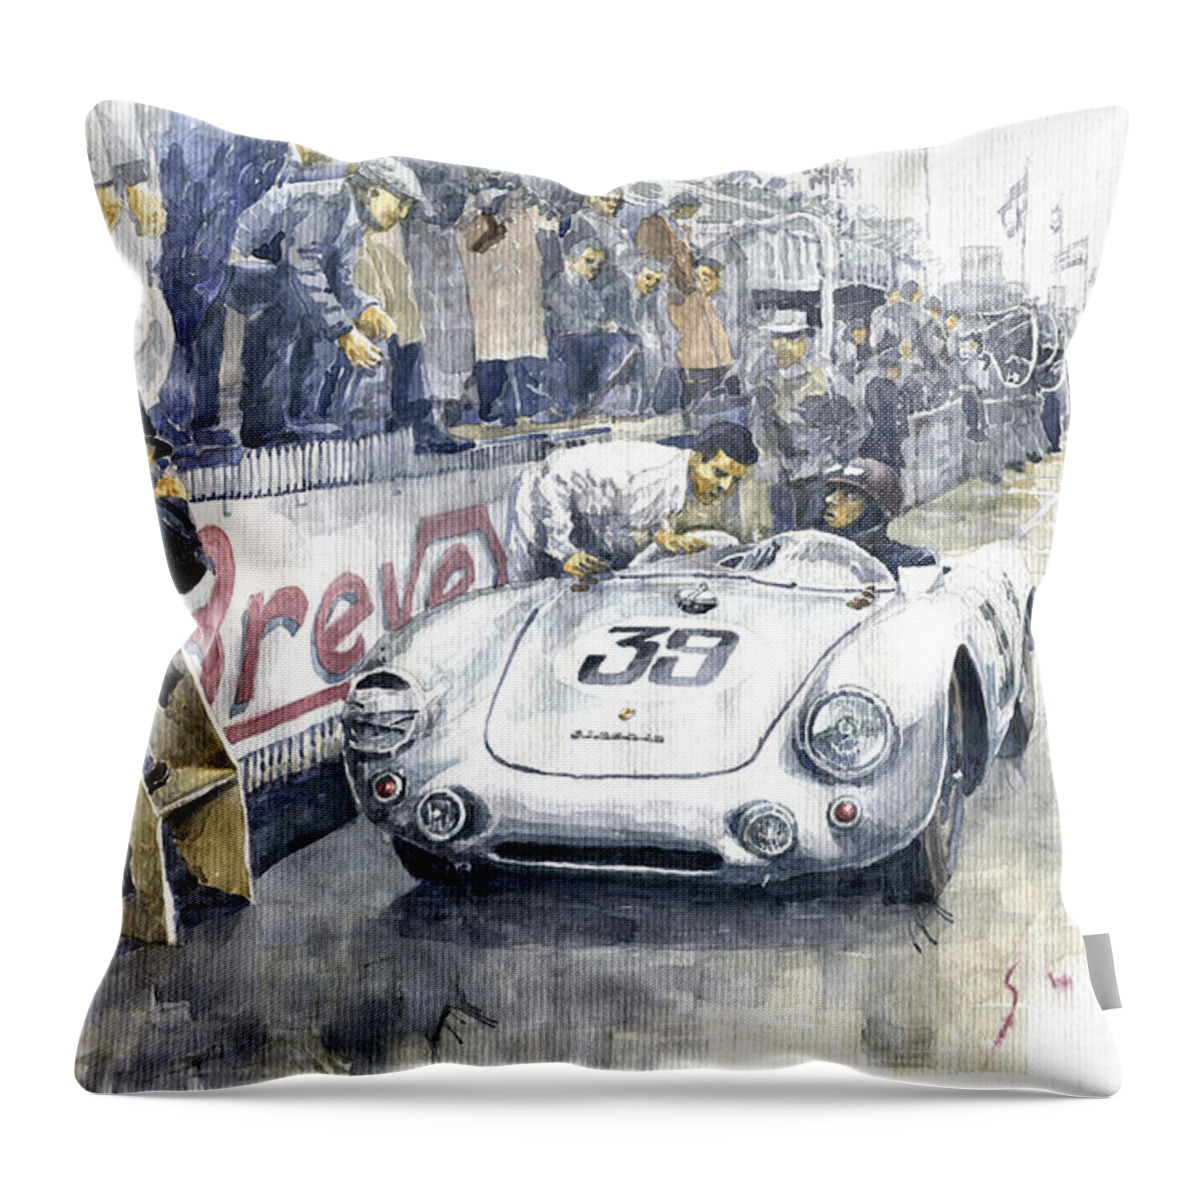 Shevchukart Throw Pillow featuring the painting 1954 Le Mans 24 Porsche 550 Hans Herrmann. by Yuriy Shevchuk